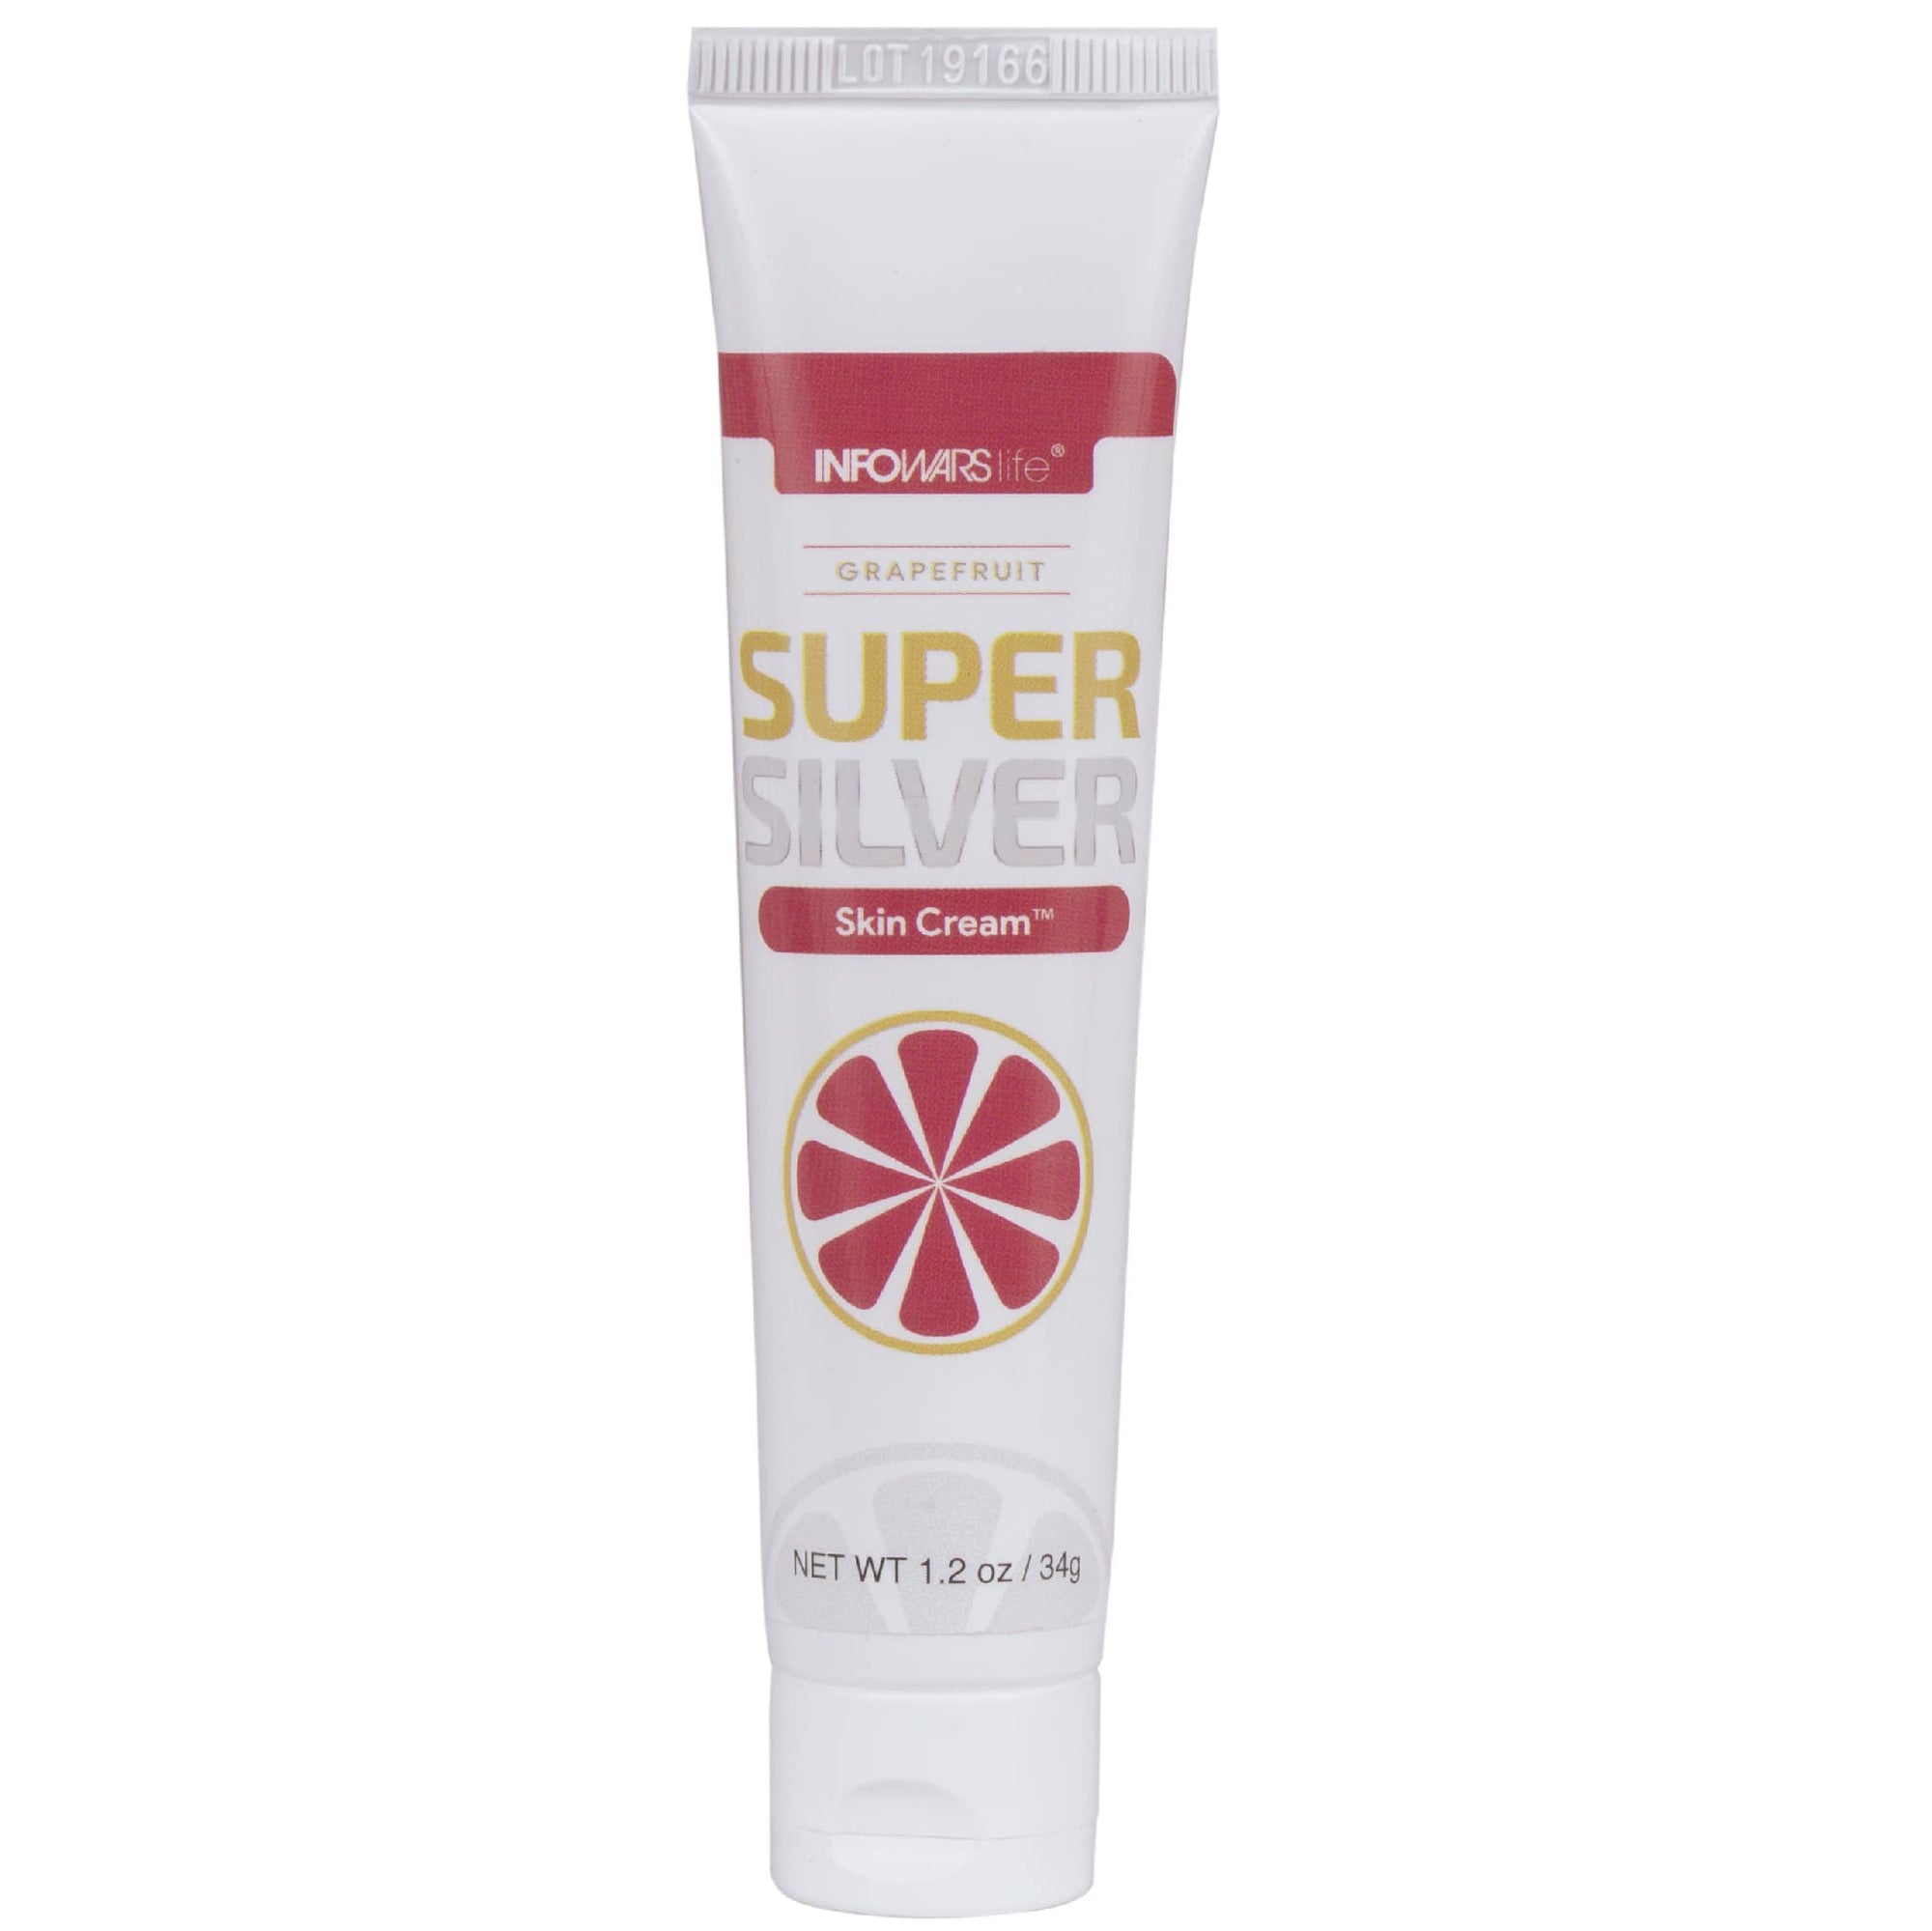 SuperSilver Grapefruit Skin Cream Front 1.2 oz